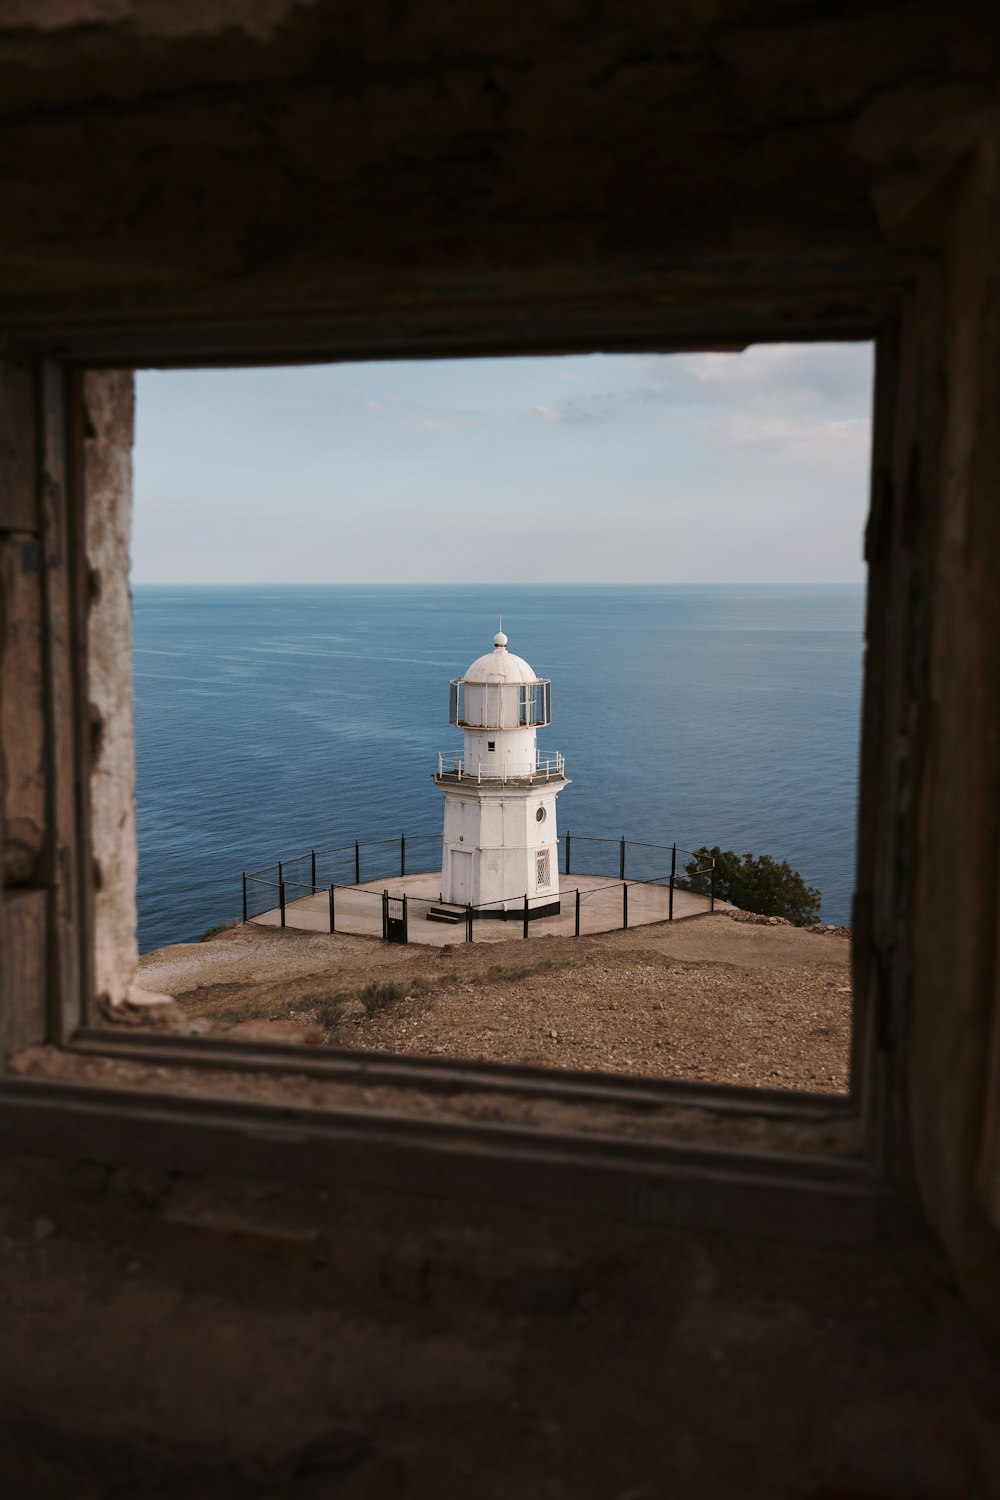 a view of a lighthouse through a window